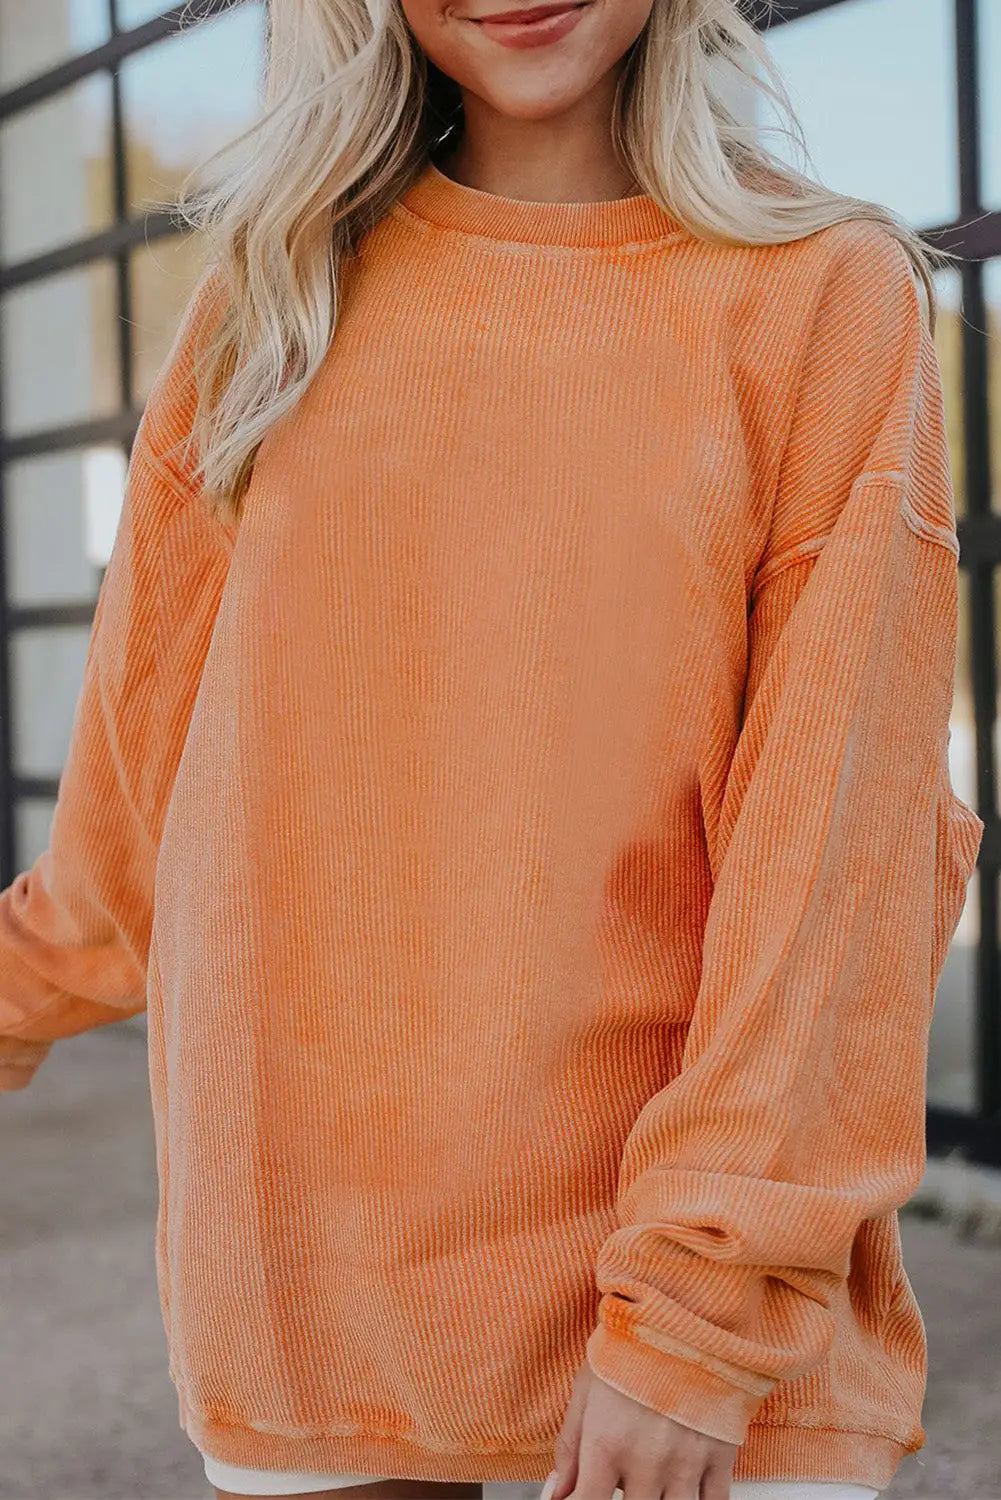 Grass green distressed clover print st patricks corded sweatshirt - orange-3 / s / 100% polyester - graphic